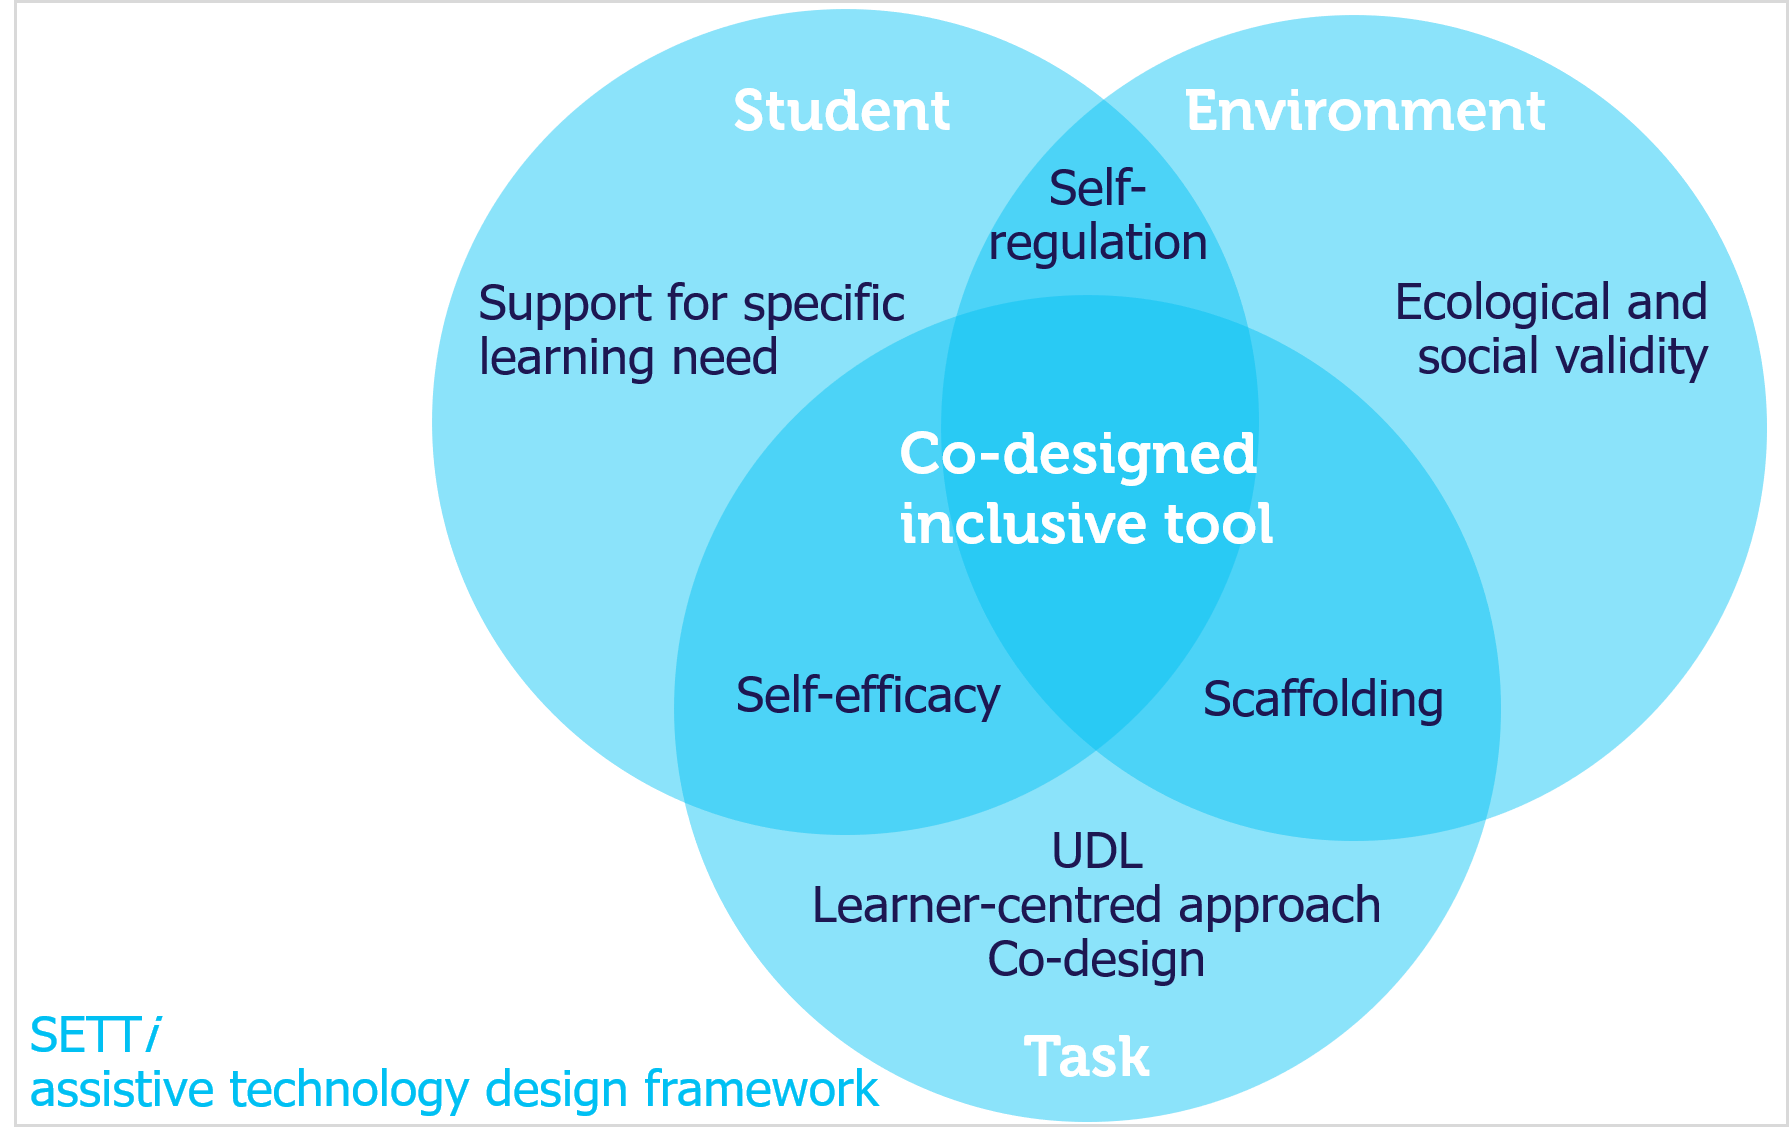 A Venn diagram showing the SETTi assistive technology design framework